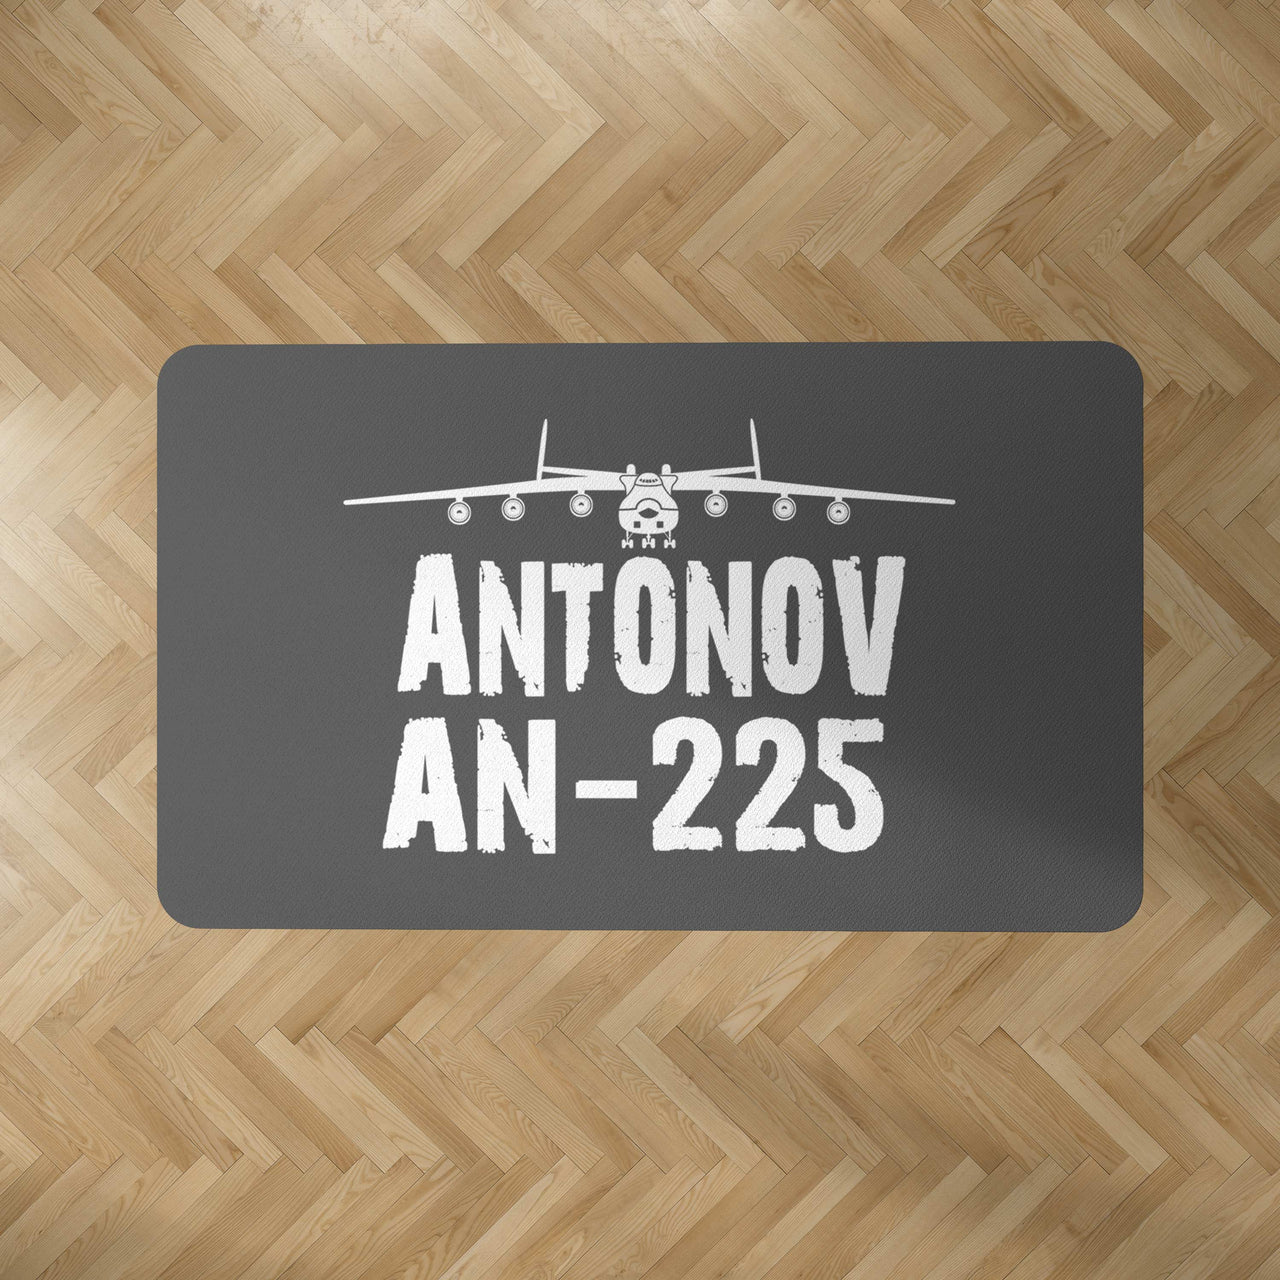 Antonov AN-225 & Plane Designed Carpet & Floor Mats